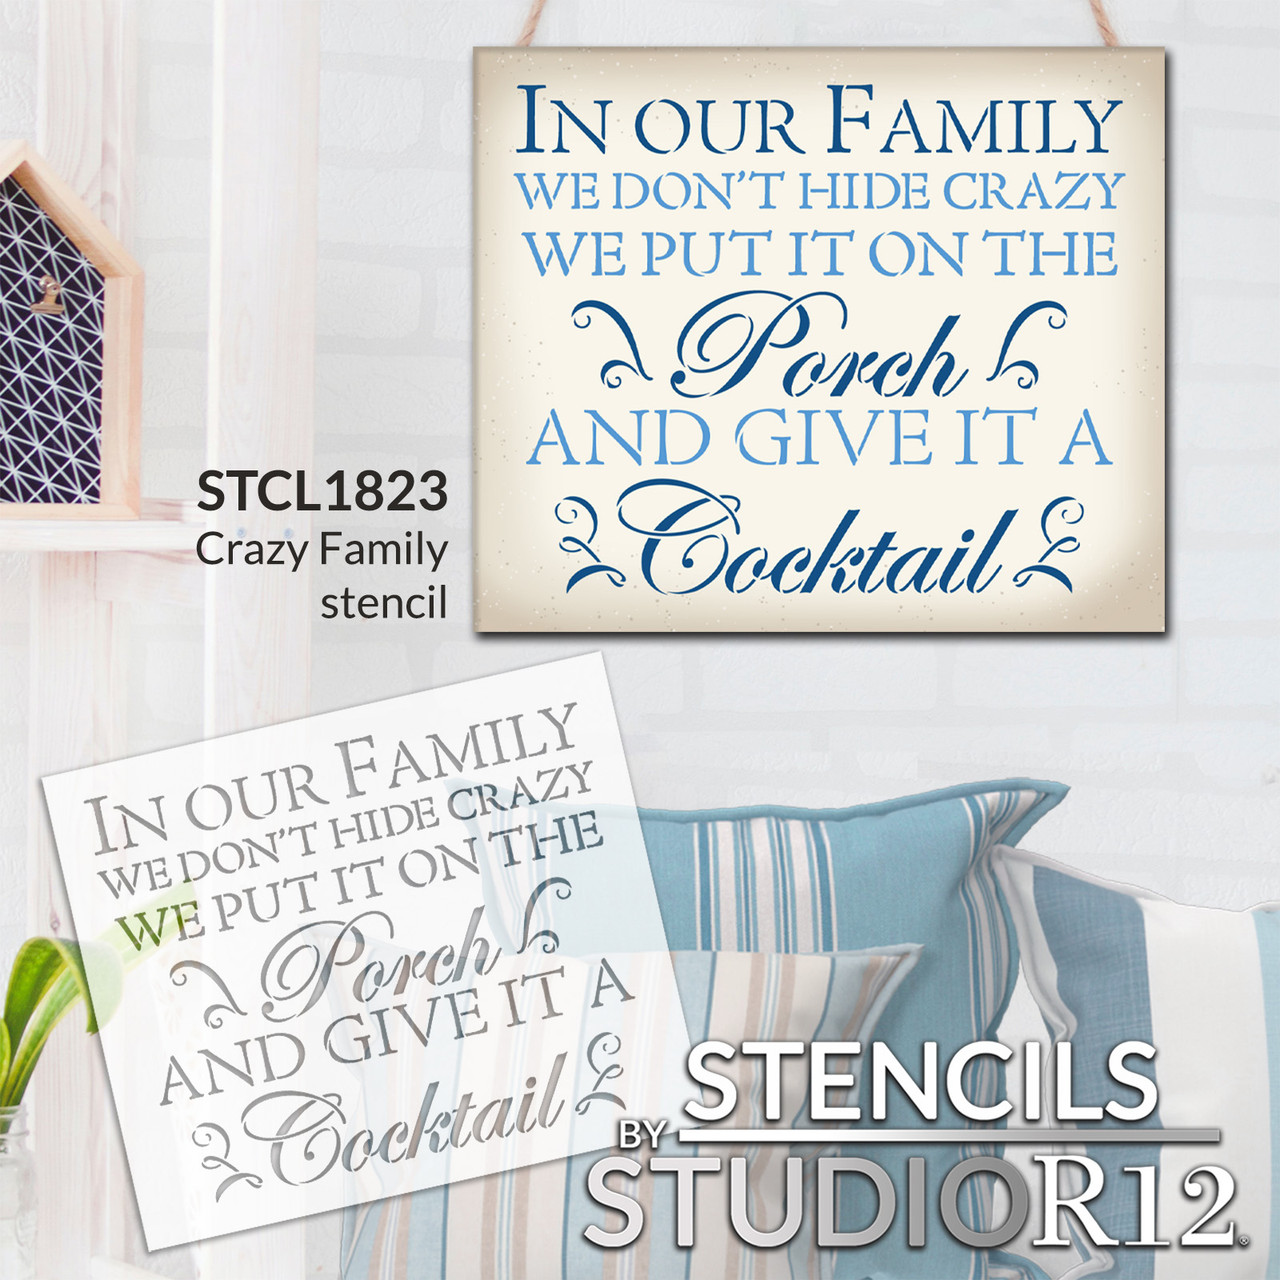 Crazy Family - Word Stencil - 13" x 11" - STCL1823_2 - by StudioR12